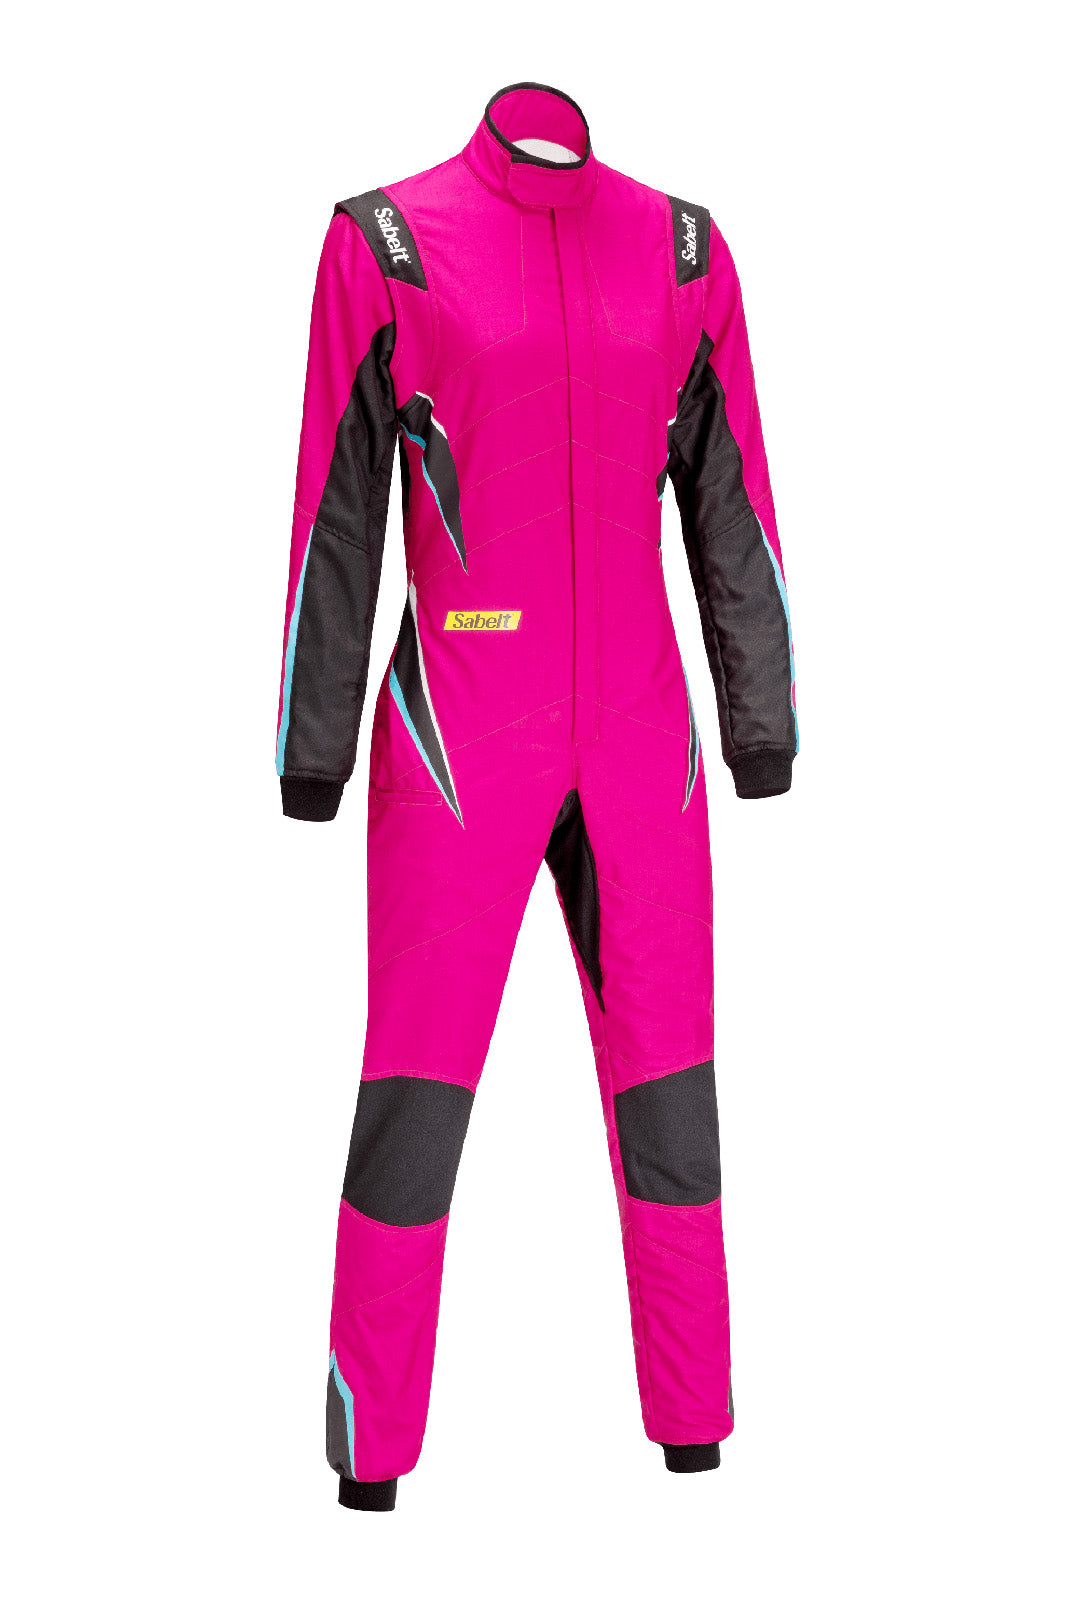 Sabelt Hero Superlight Womens TS-10 Race Suit